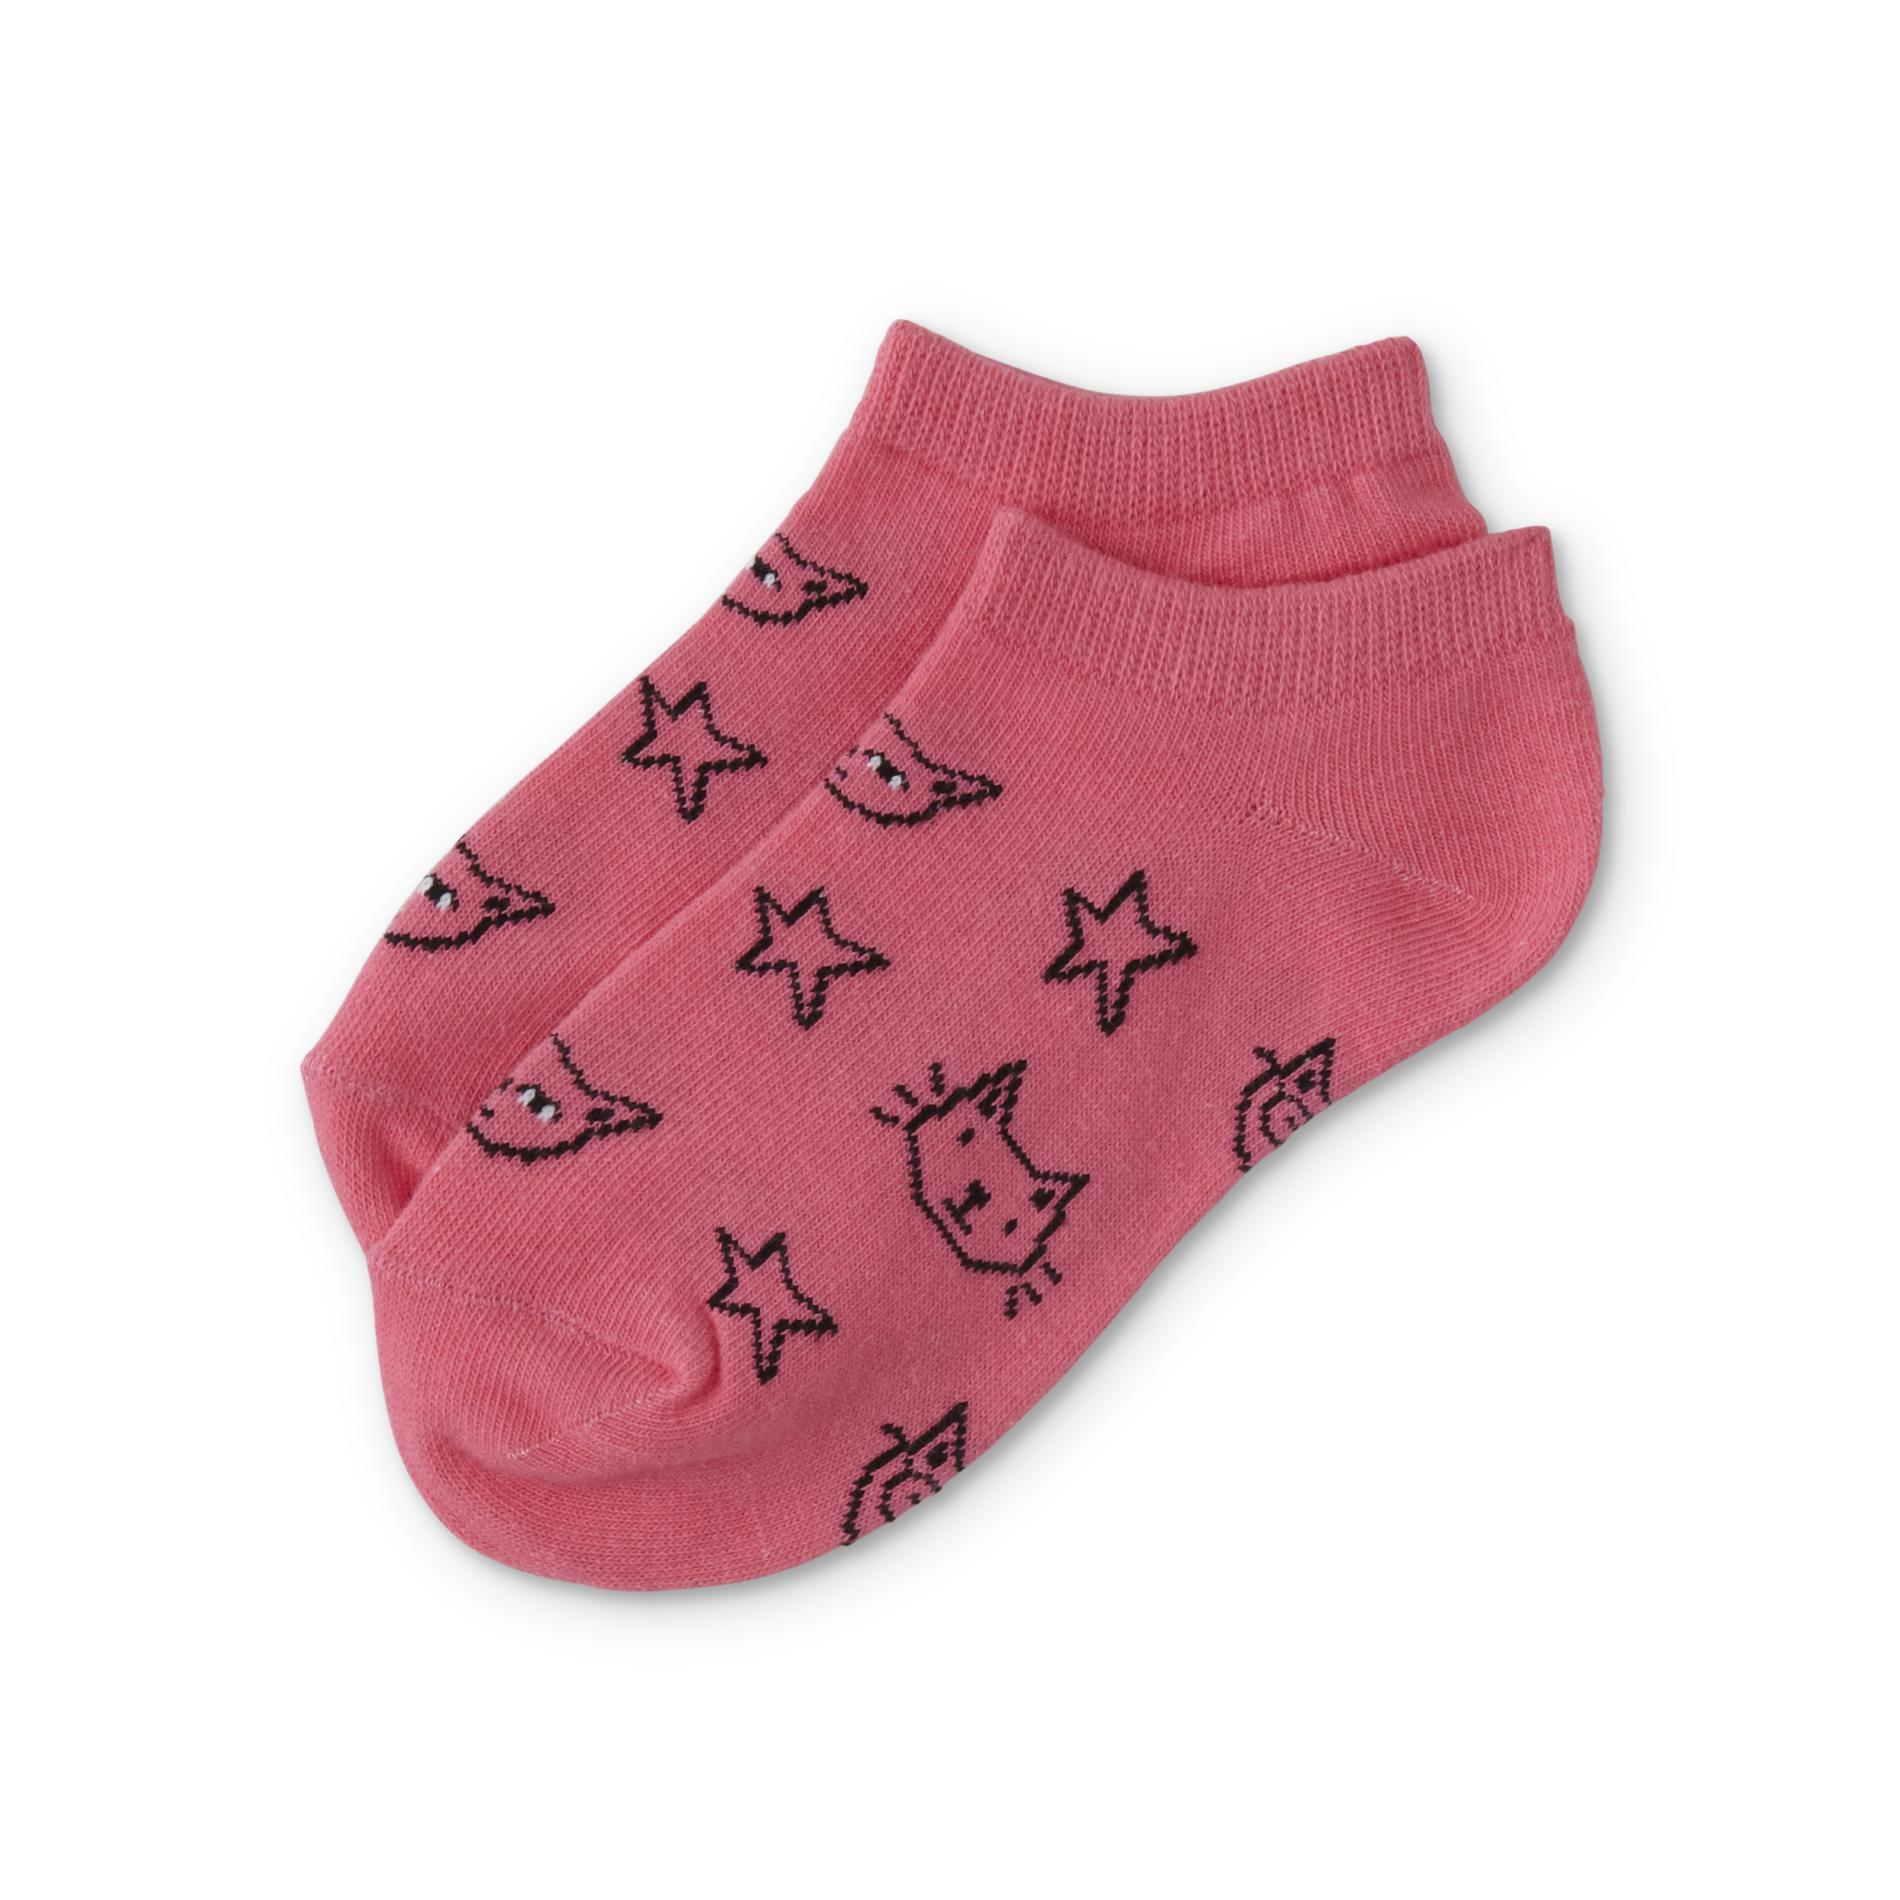 Girls' Ankle Socks - Cats